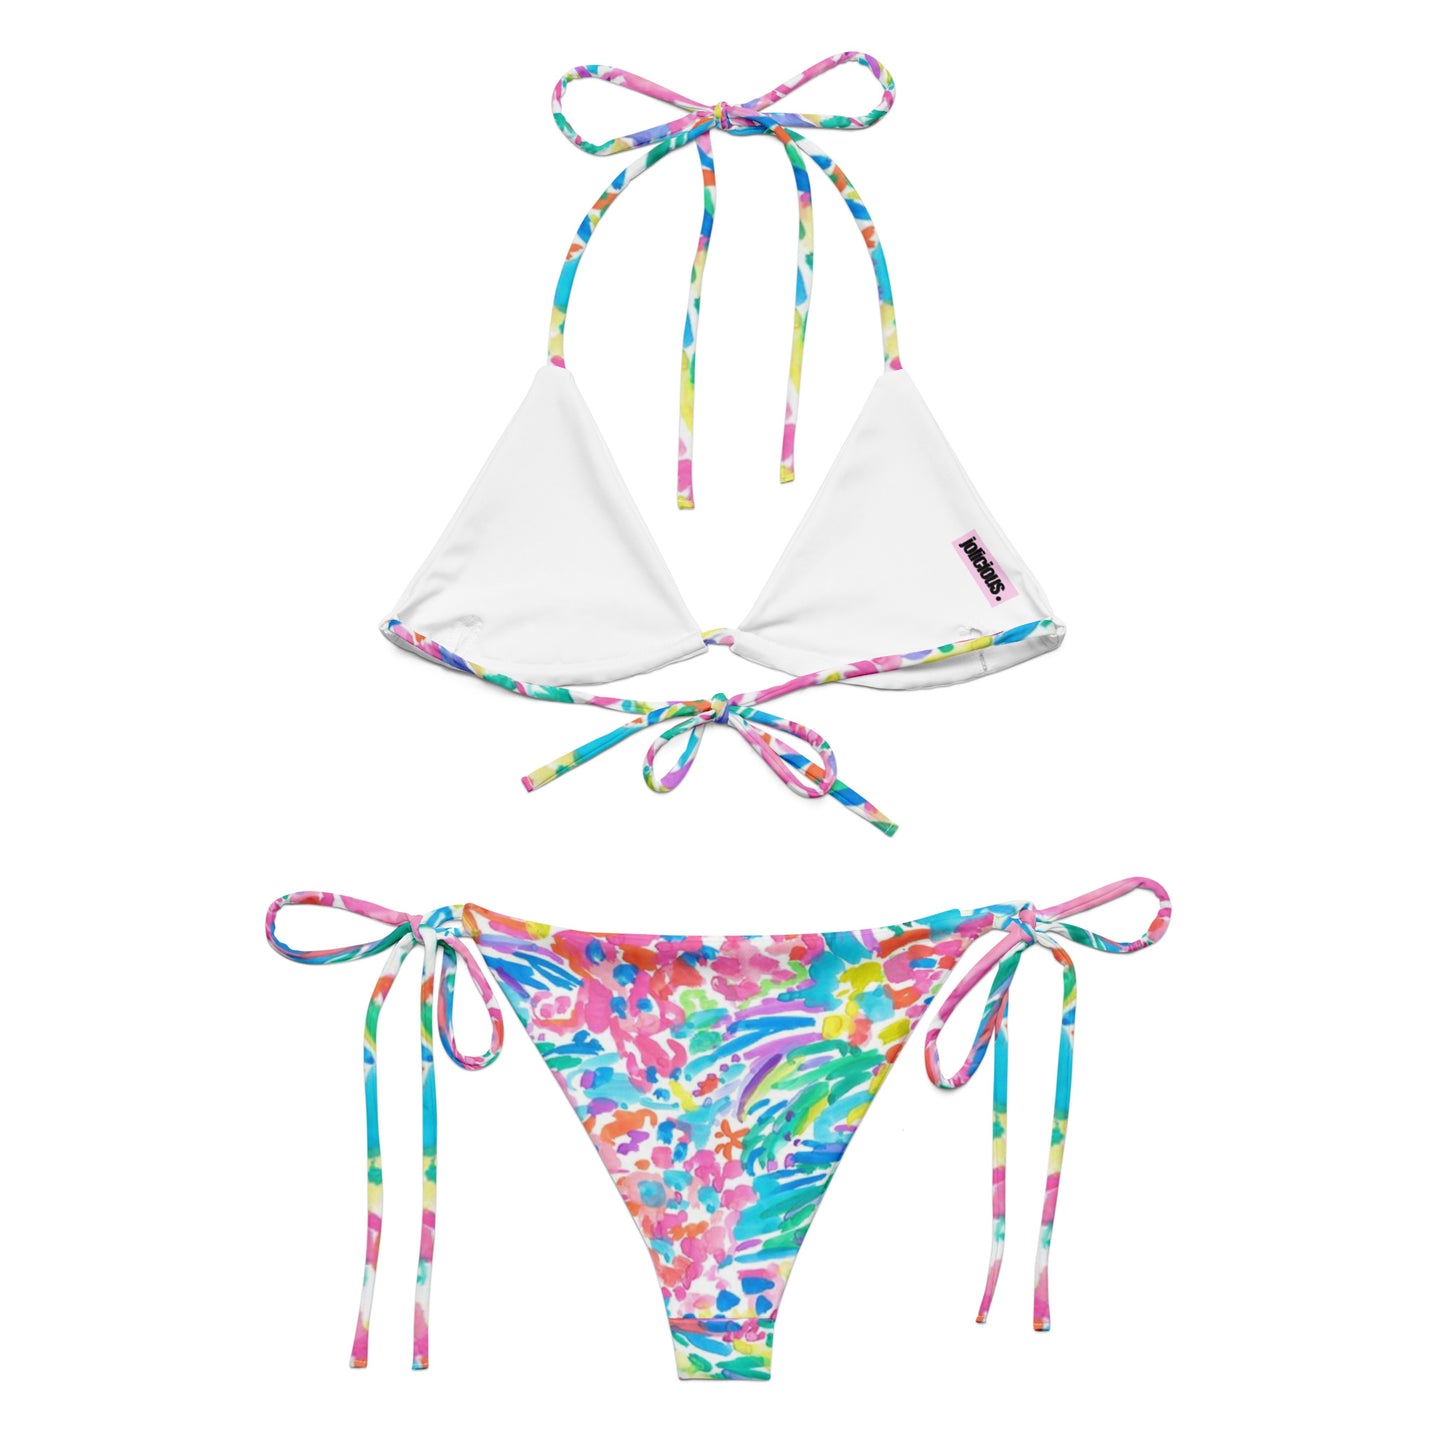 Colorful bikini set